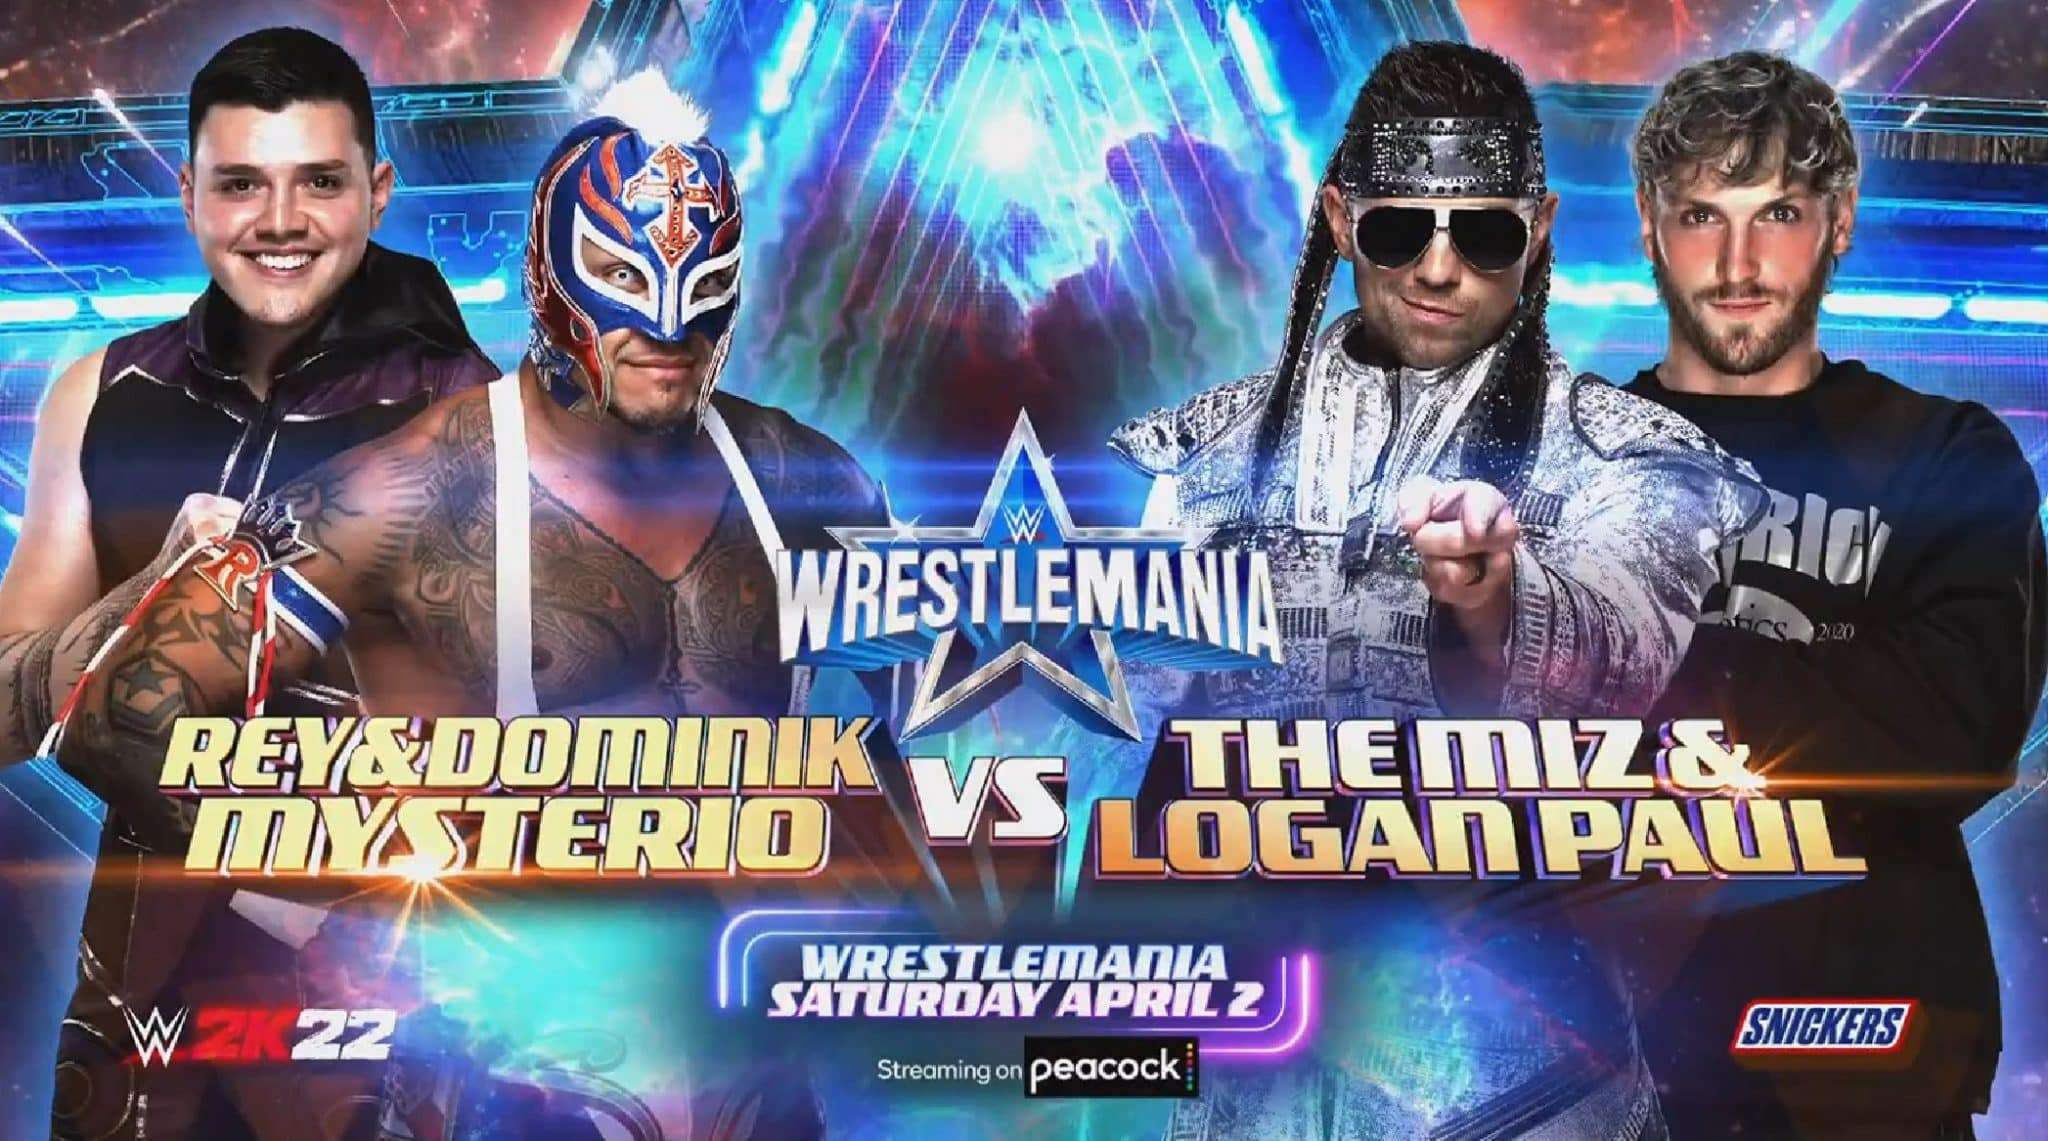 Logan Paul and The Miz vs Rey Mysterio and Dominik Mysterio WrestleMania 38 match graphic